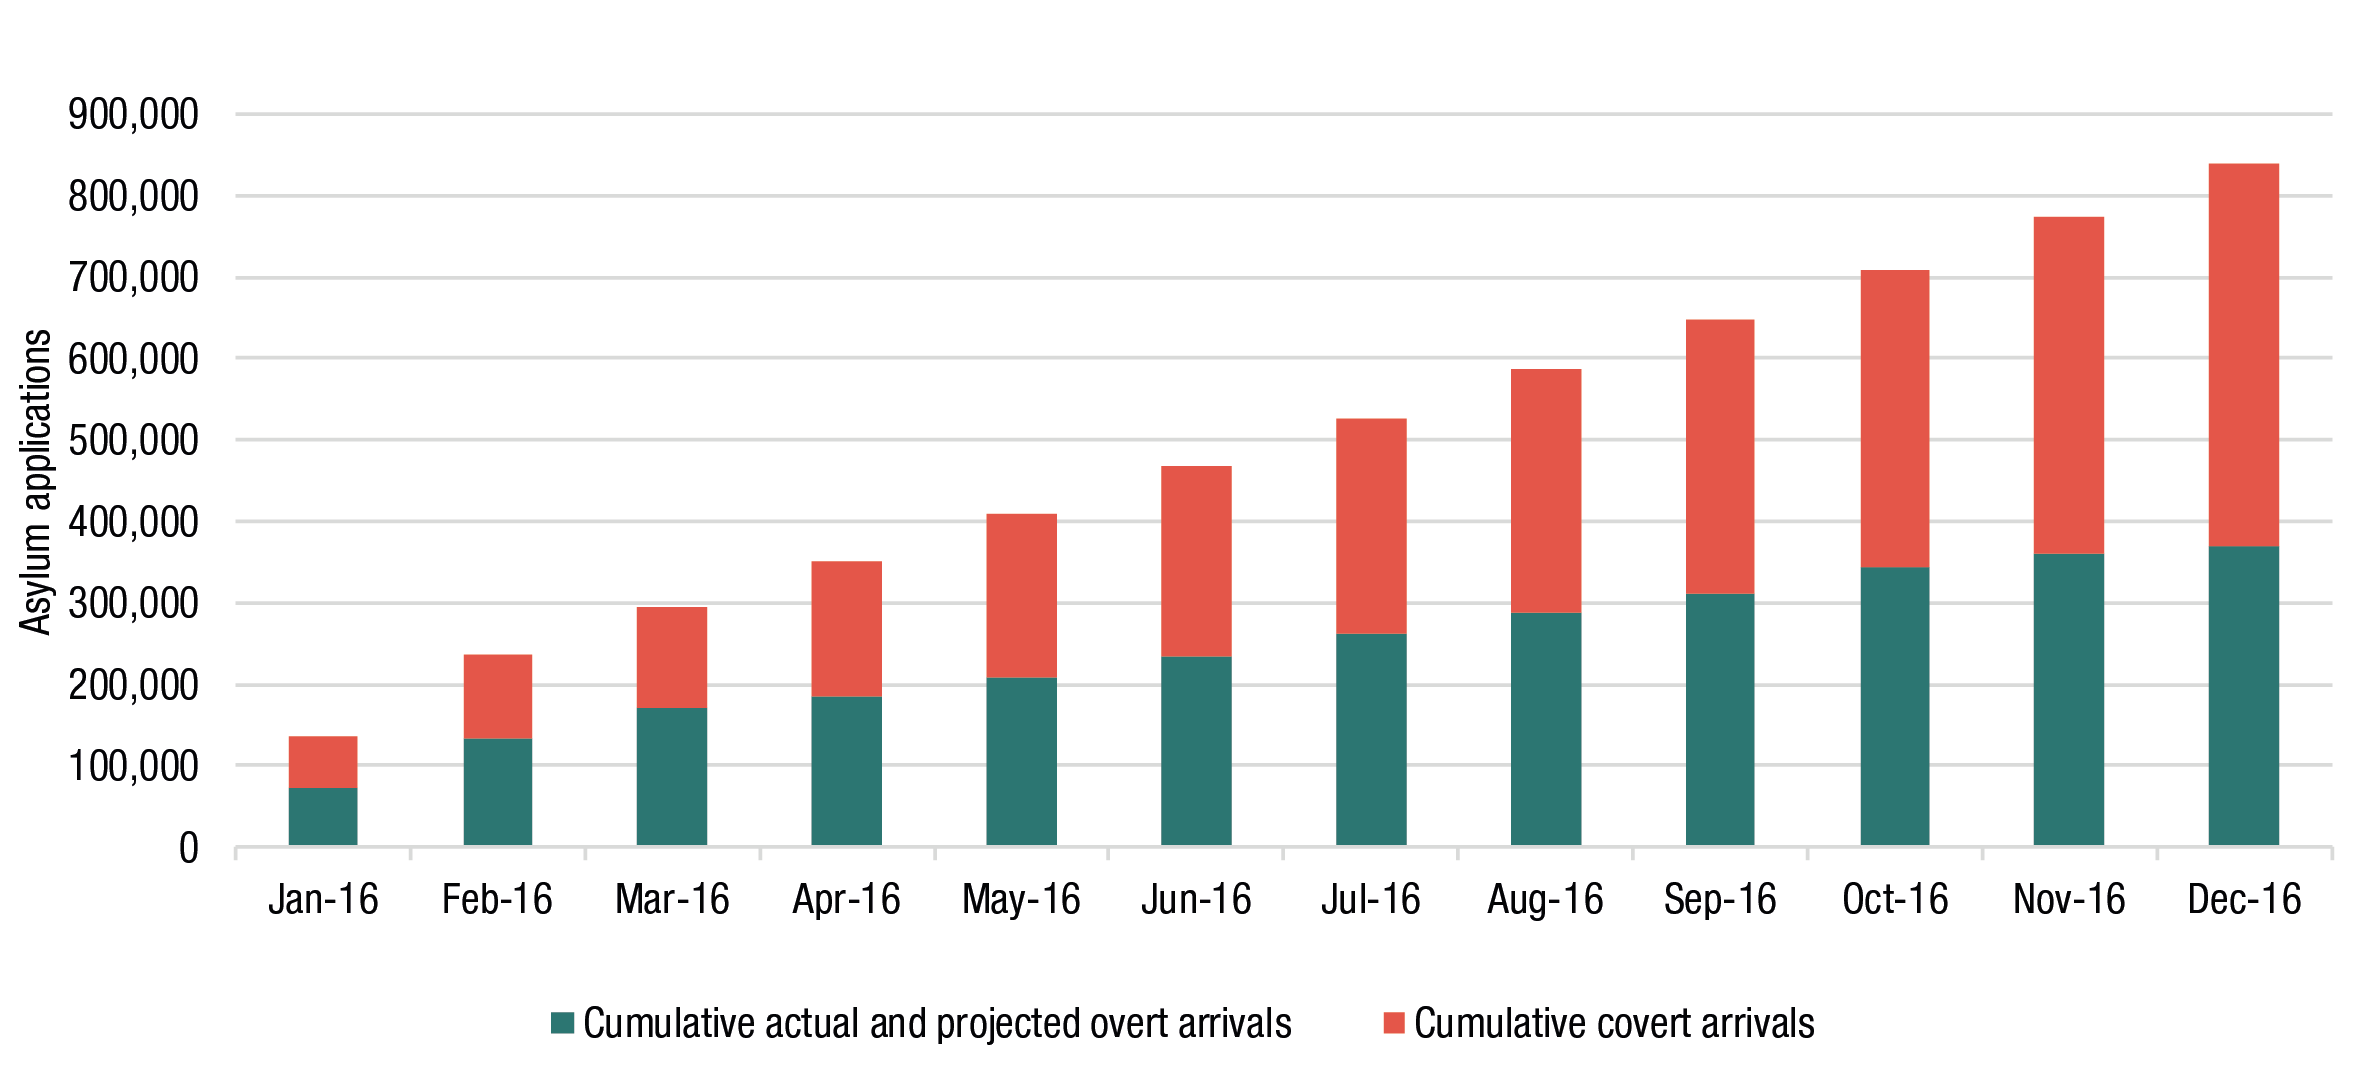 Cumulative arrivals in Europe, as a share of asylum applications